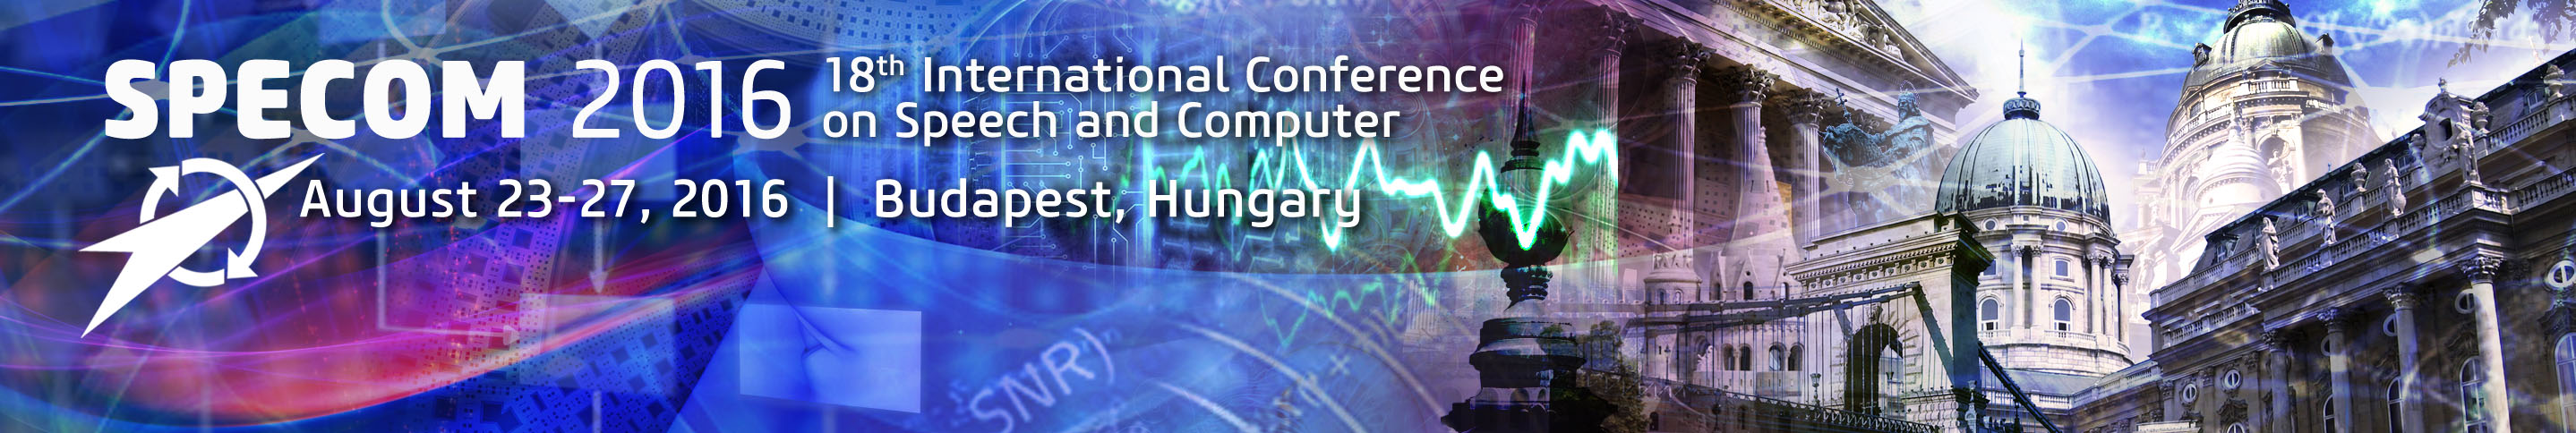 Konferenciák, nagyrendezvények SPECOM 2016 (18th International Conference on Speech and Computer) 2016. aug. 23-27.